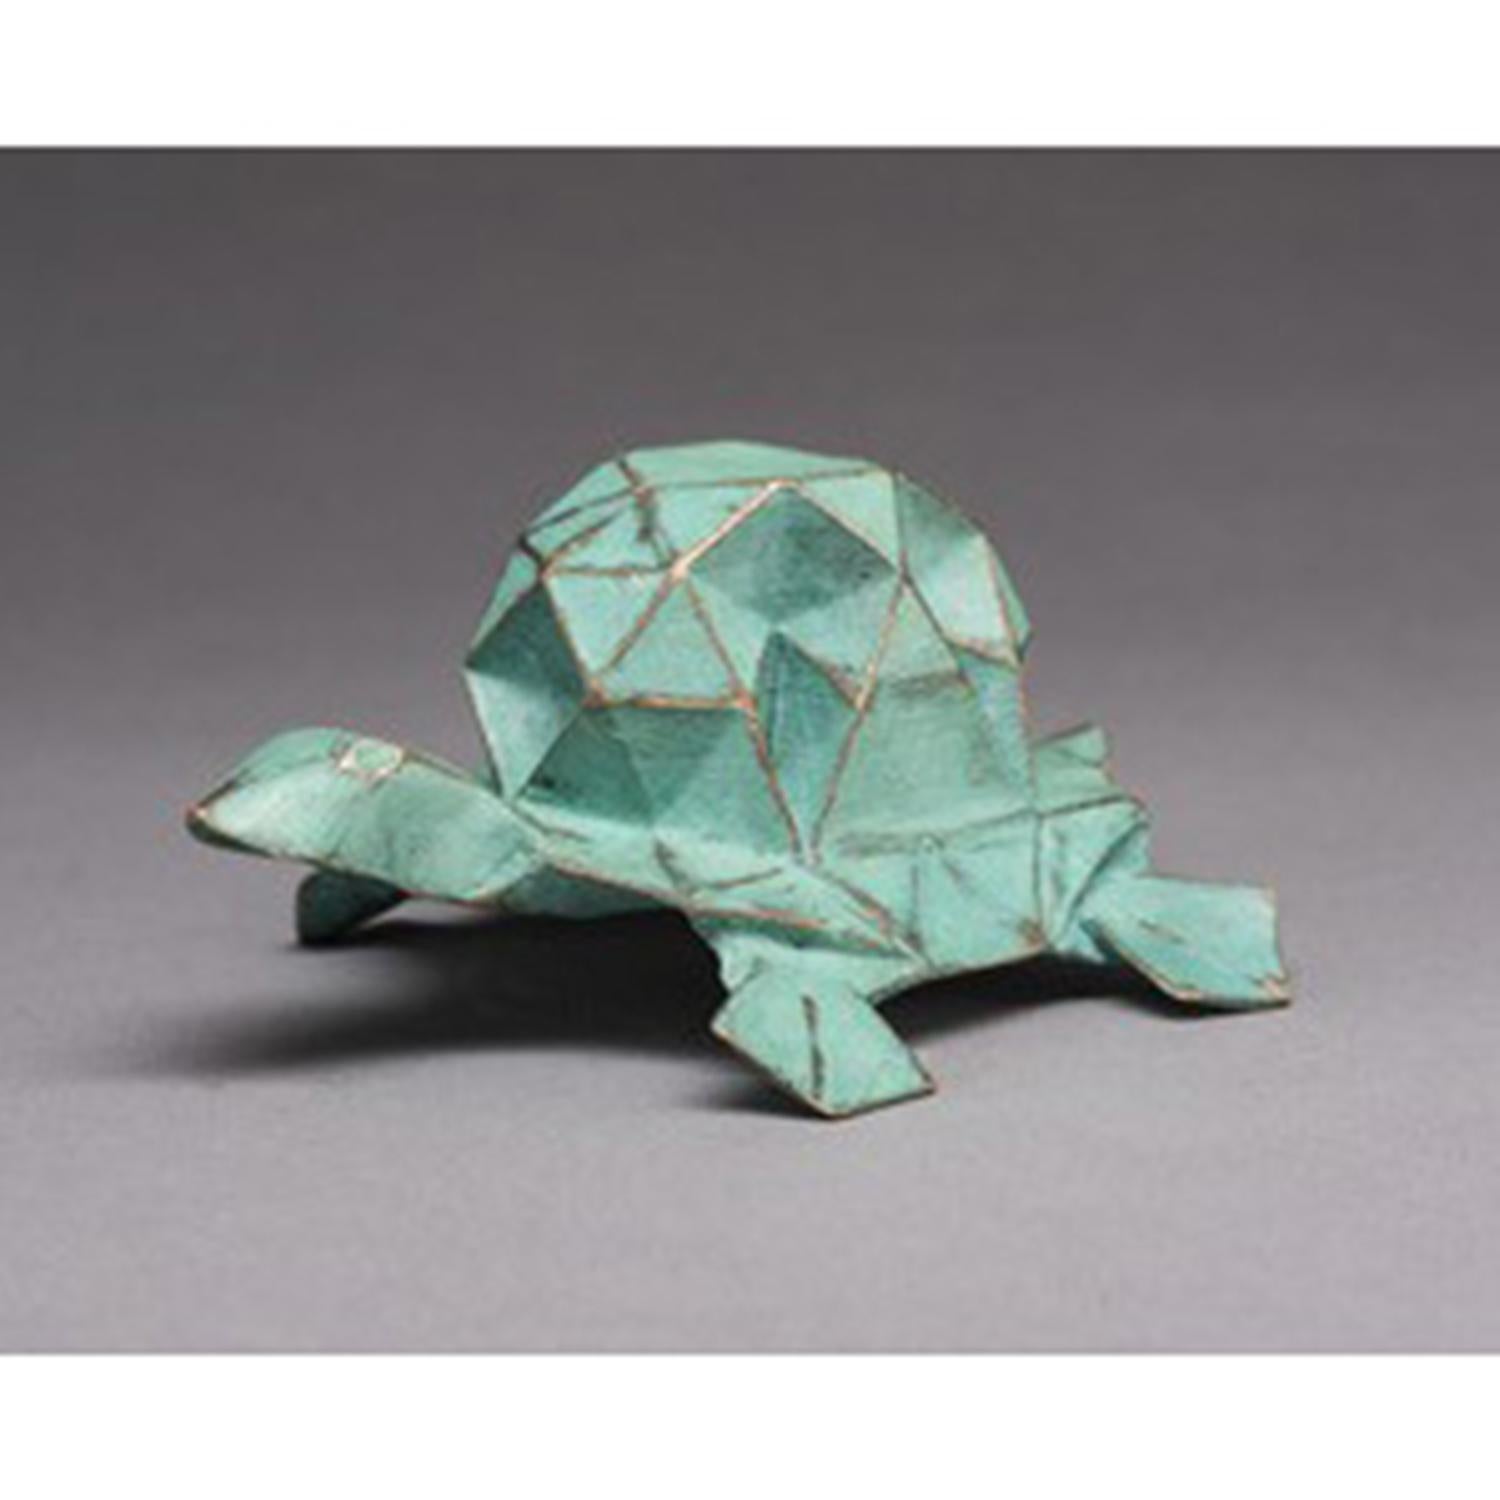 Kevin Box Figurative Sculpture - Star Tortoise 3D AP